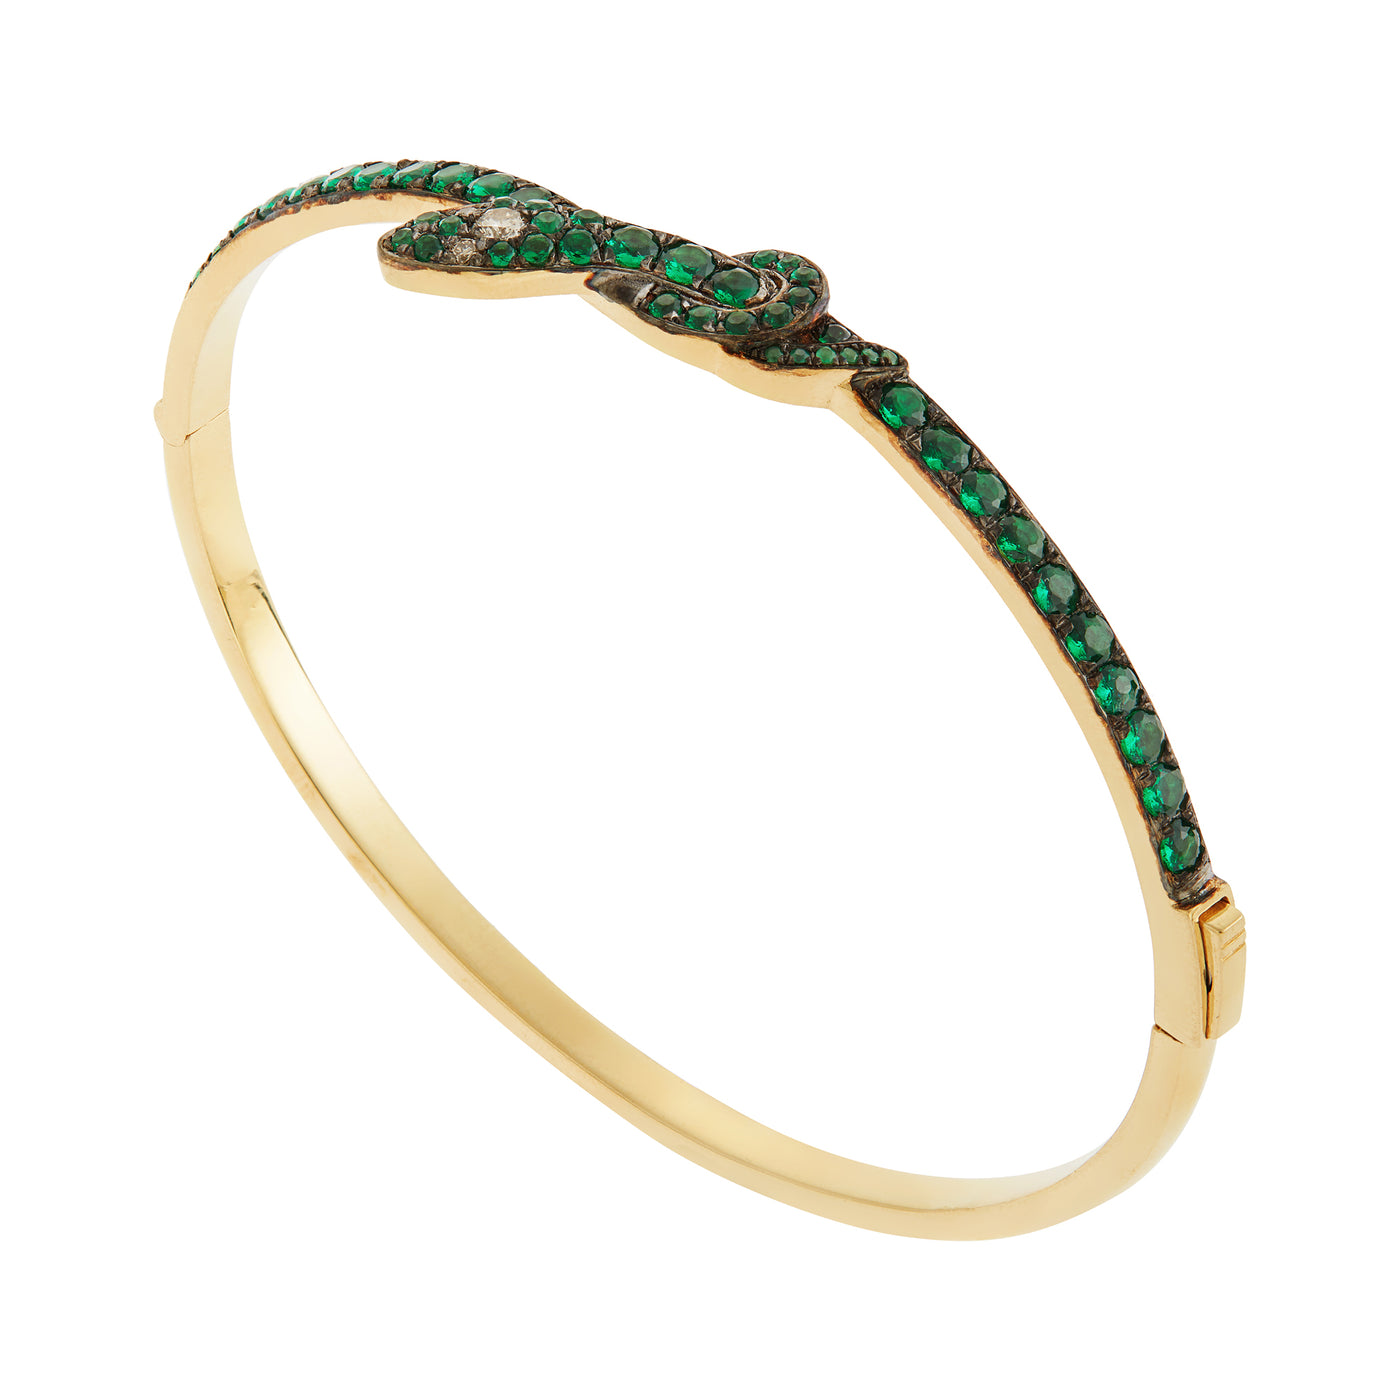 Coiled Snake Emerald Bangle - SNAKES - Ileana Makri store